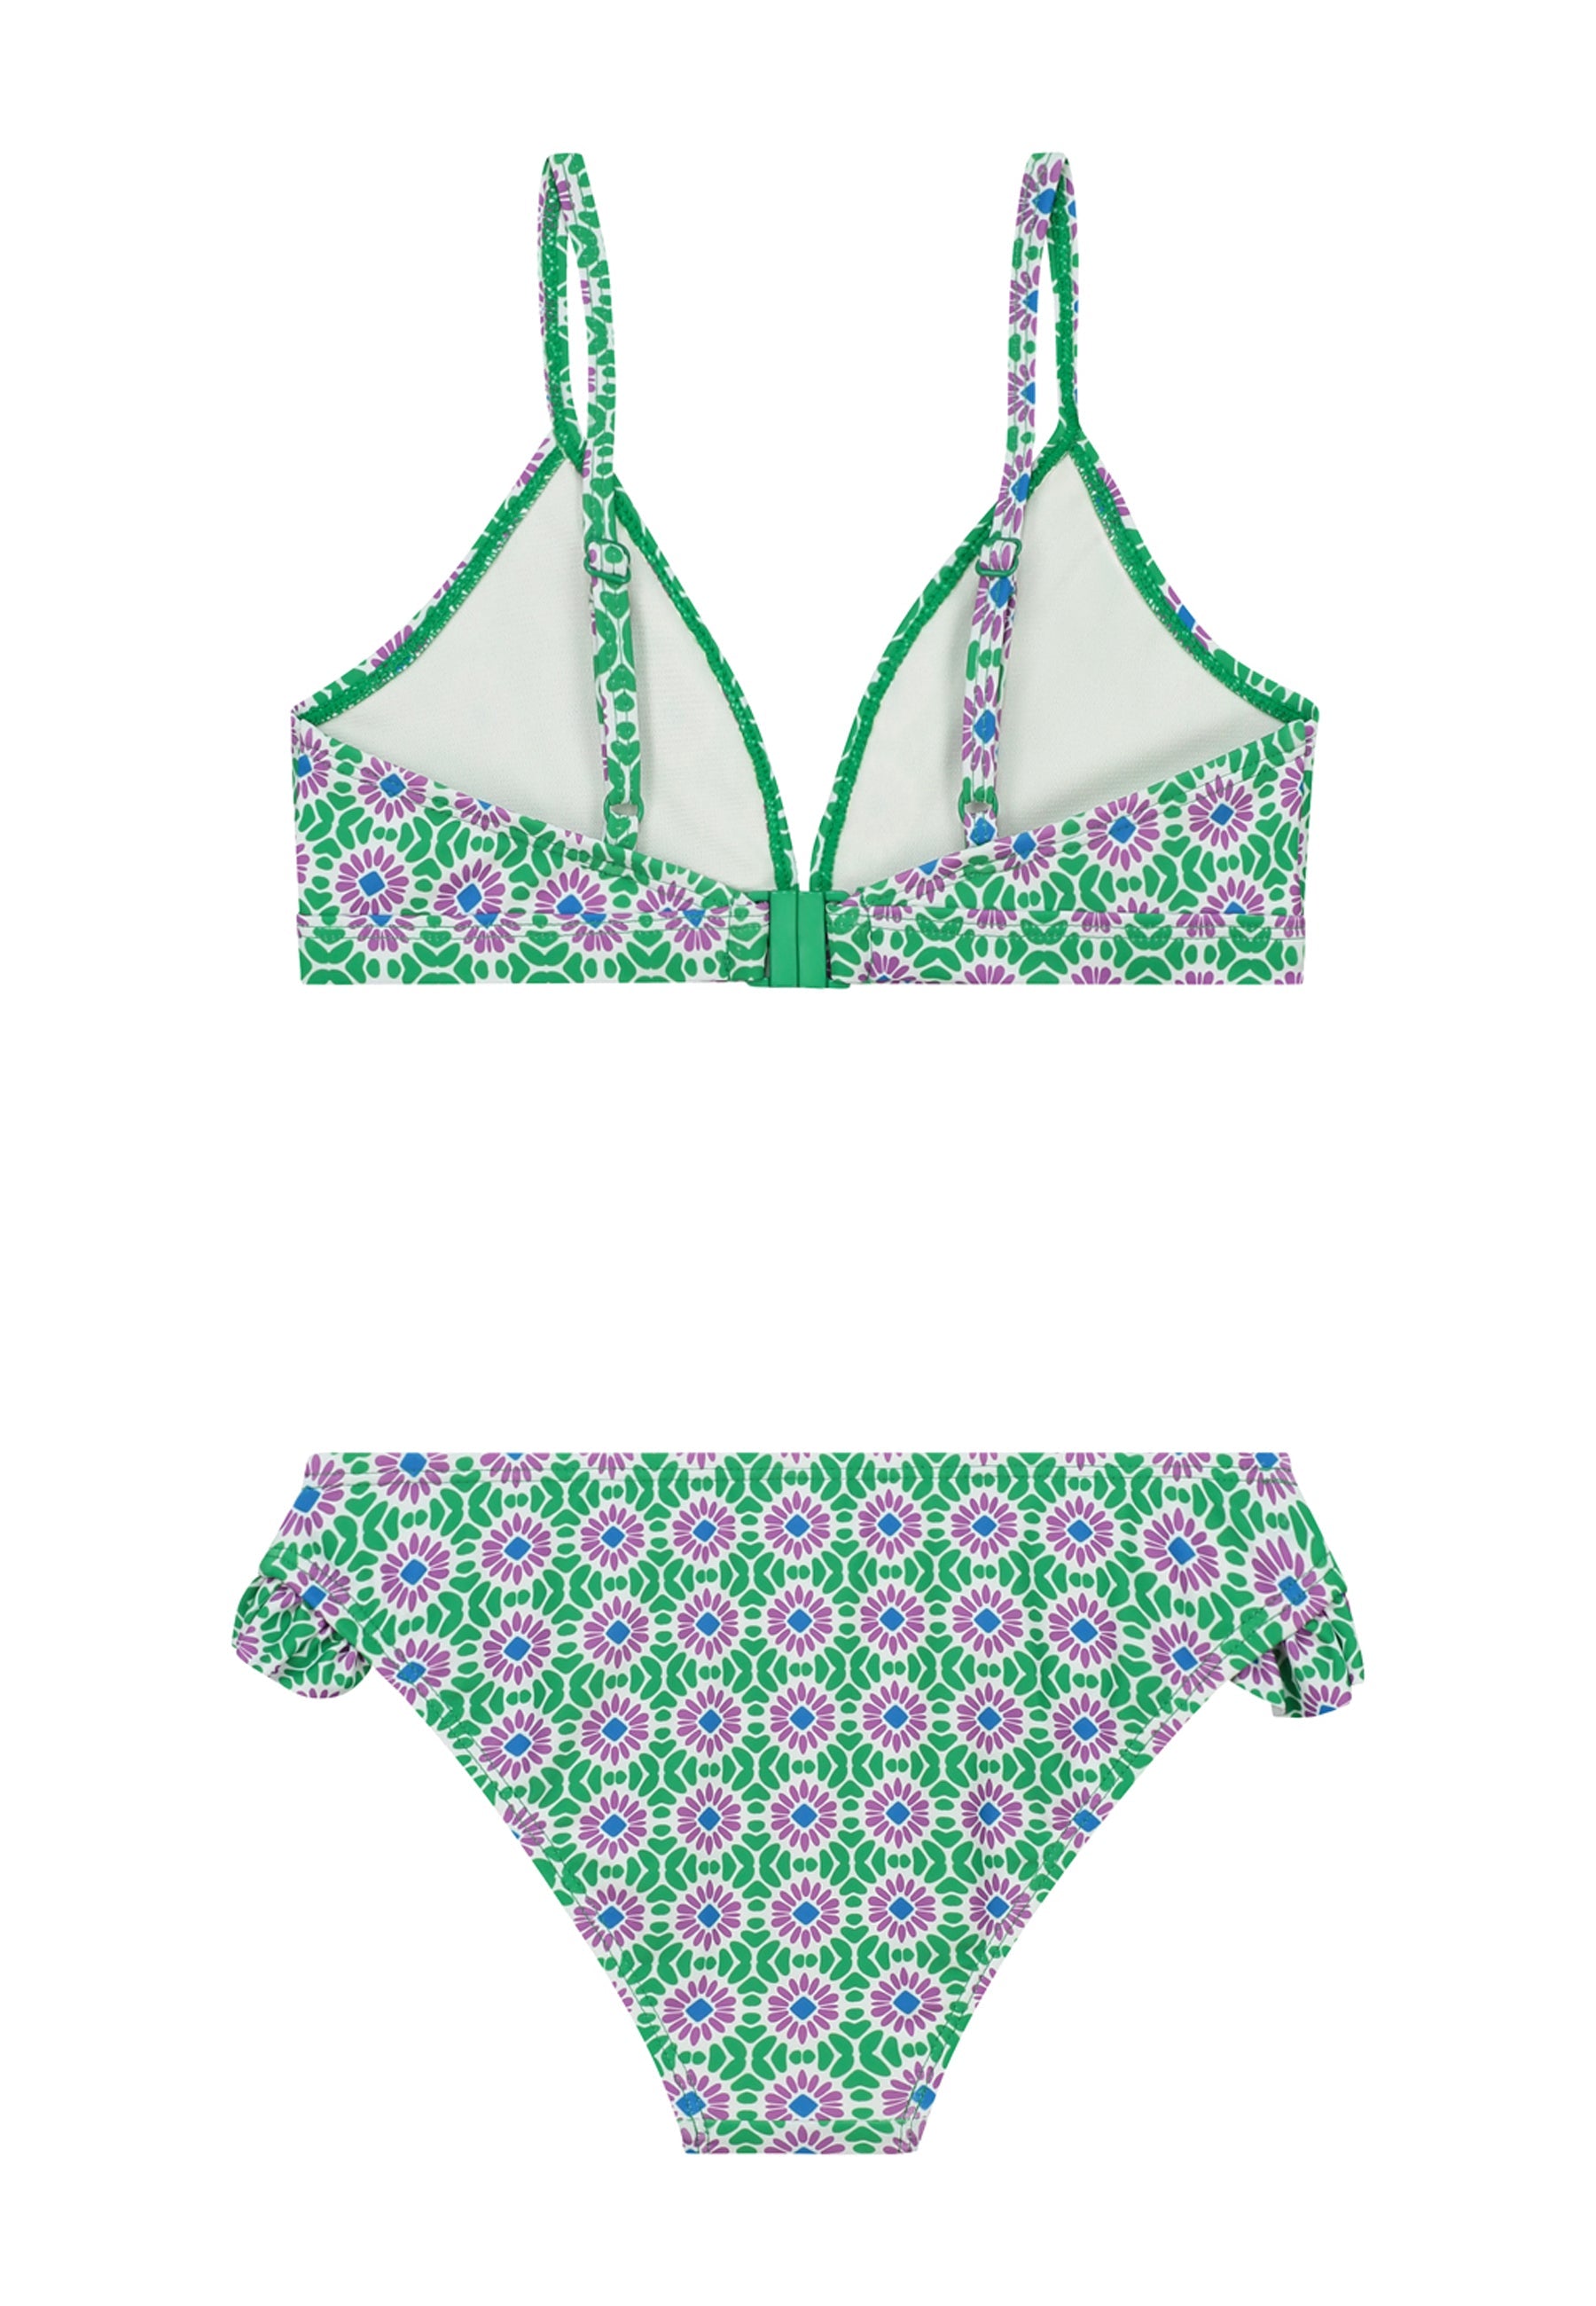 Meisjes BLAKE bikini set porto tile van  in de kleur tropic green tile in maat 158-164.